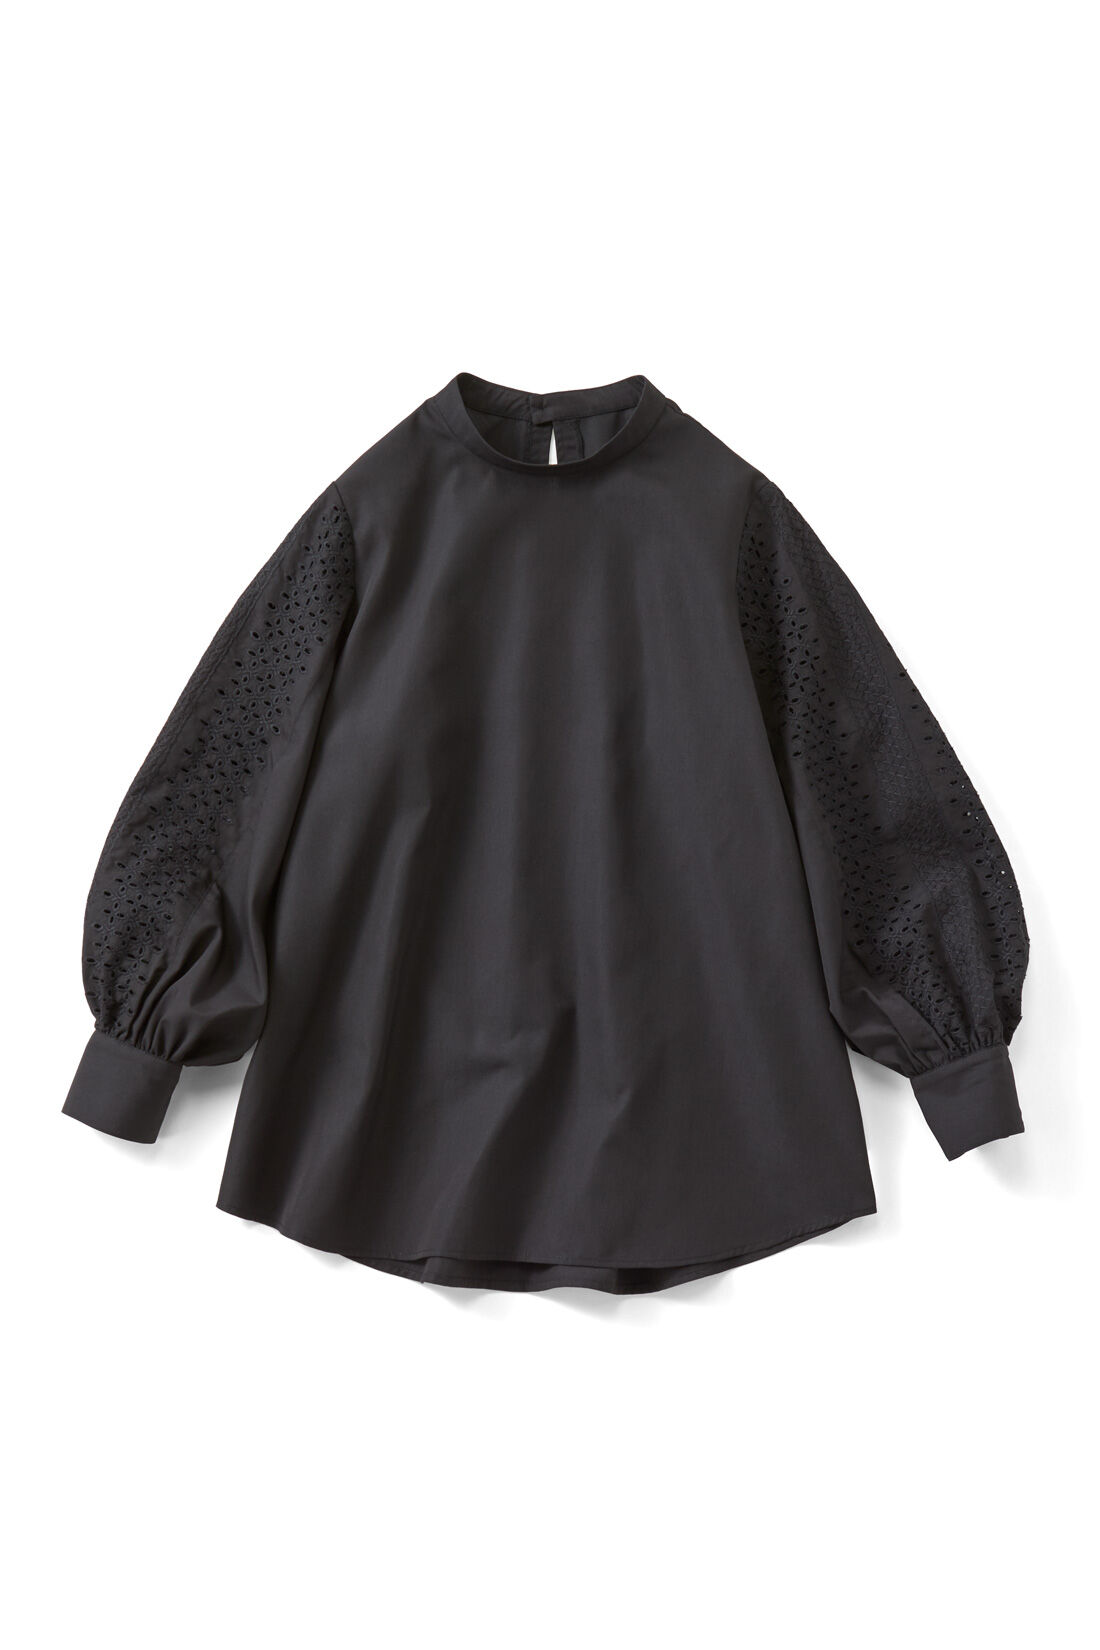 IEDIT[イディット]　アンティーク風デザインの袖レースブラウス|ブラック